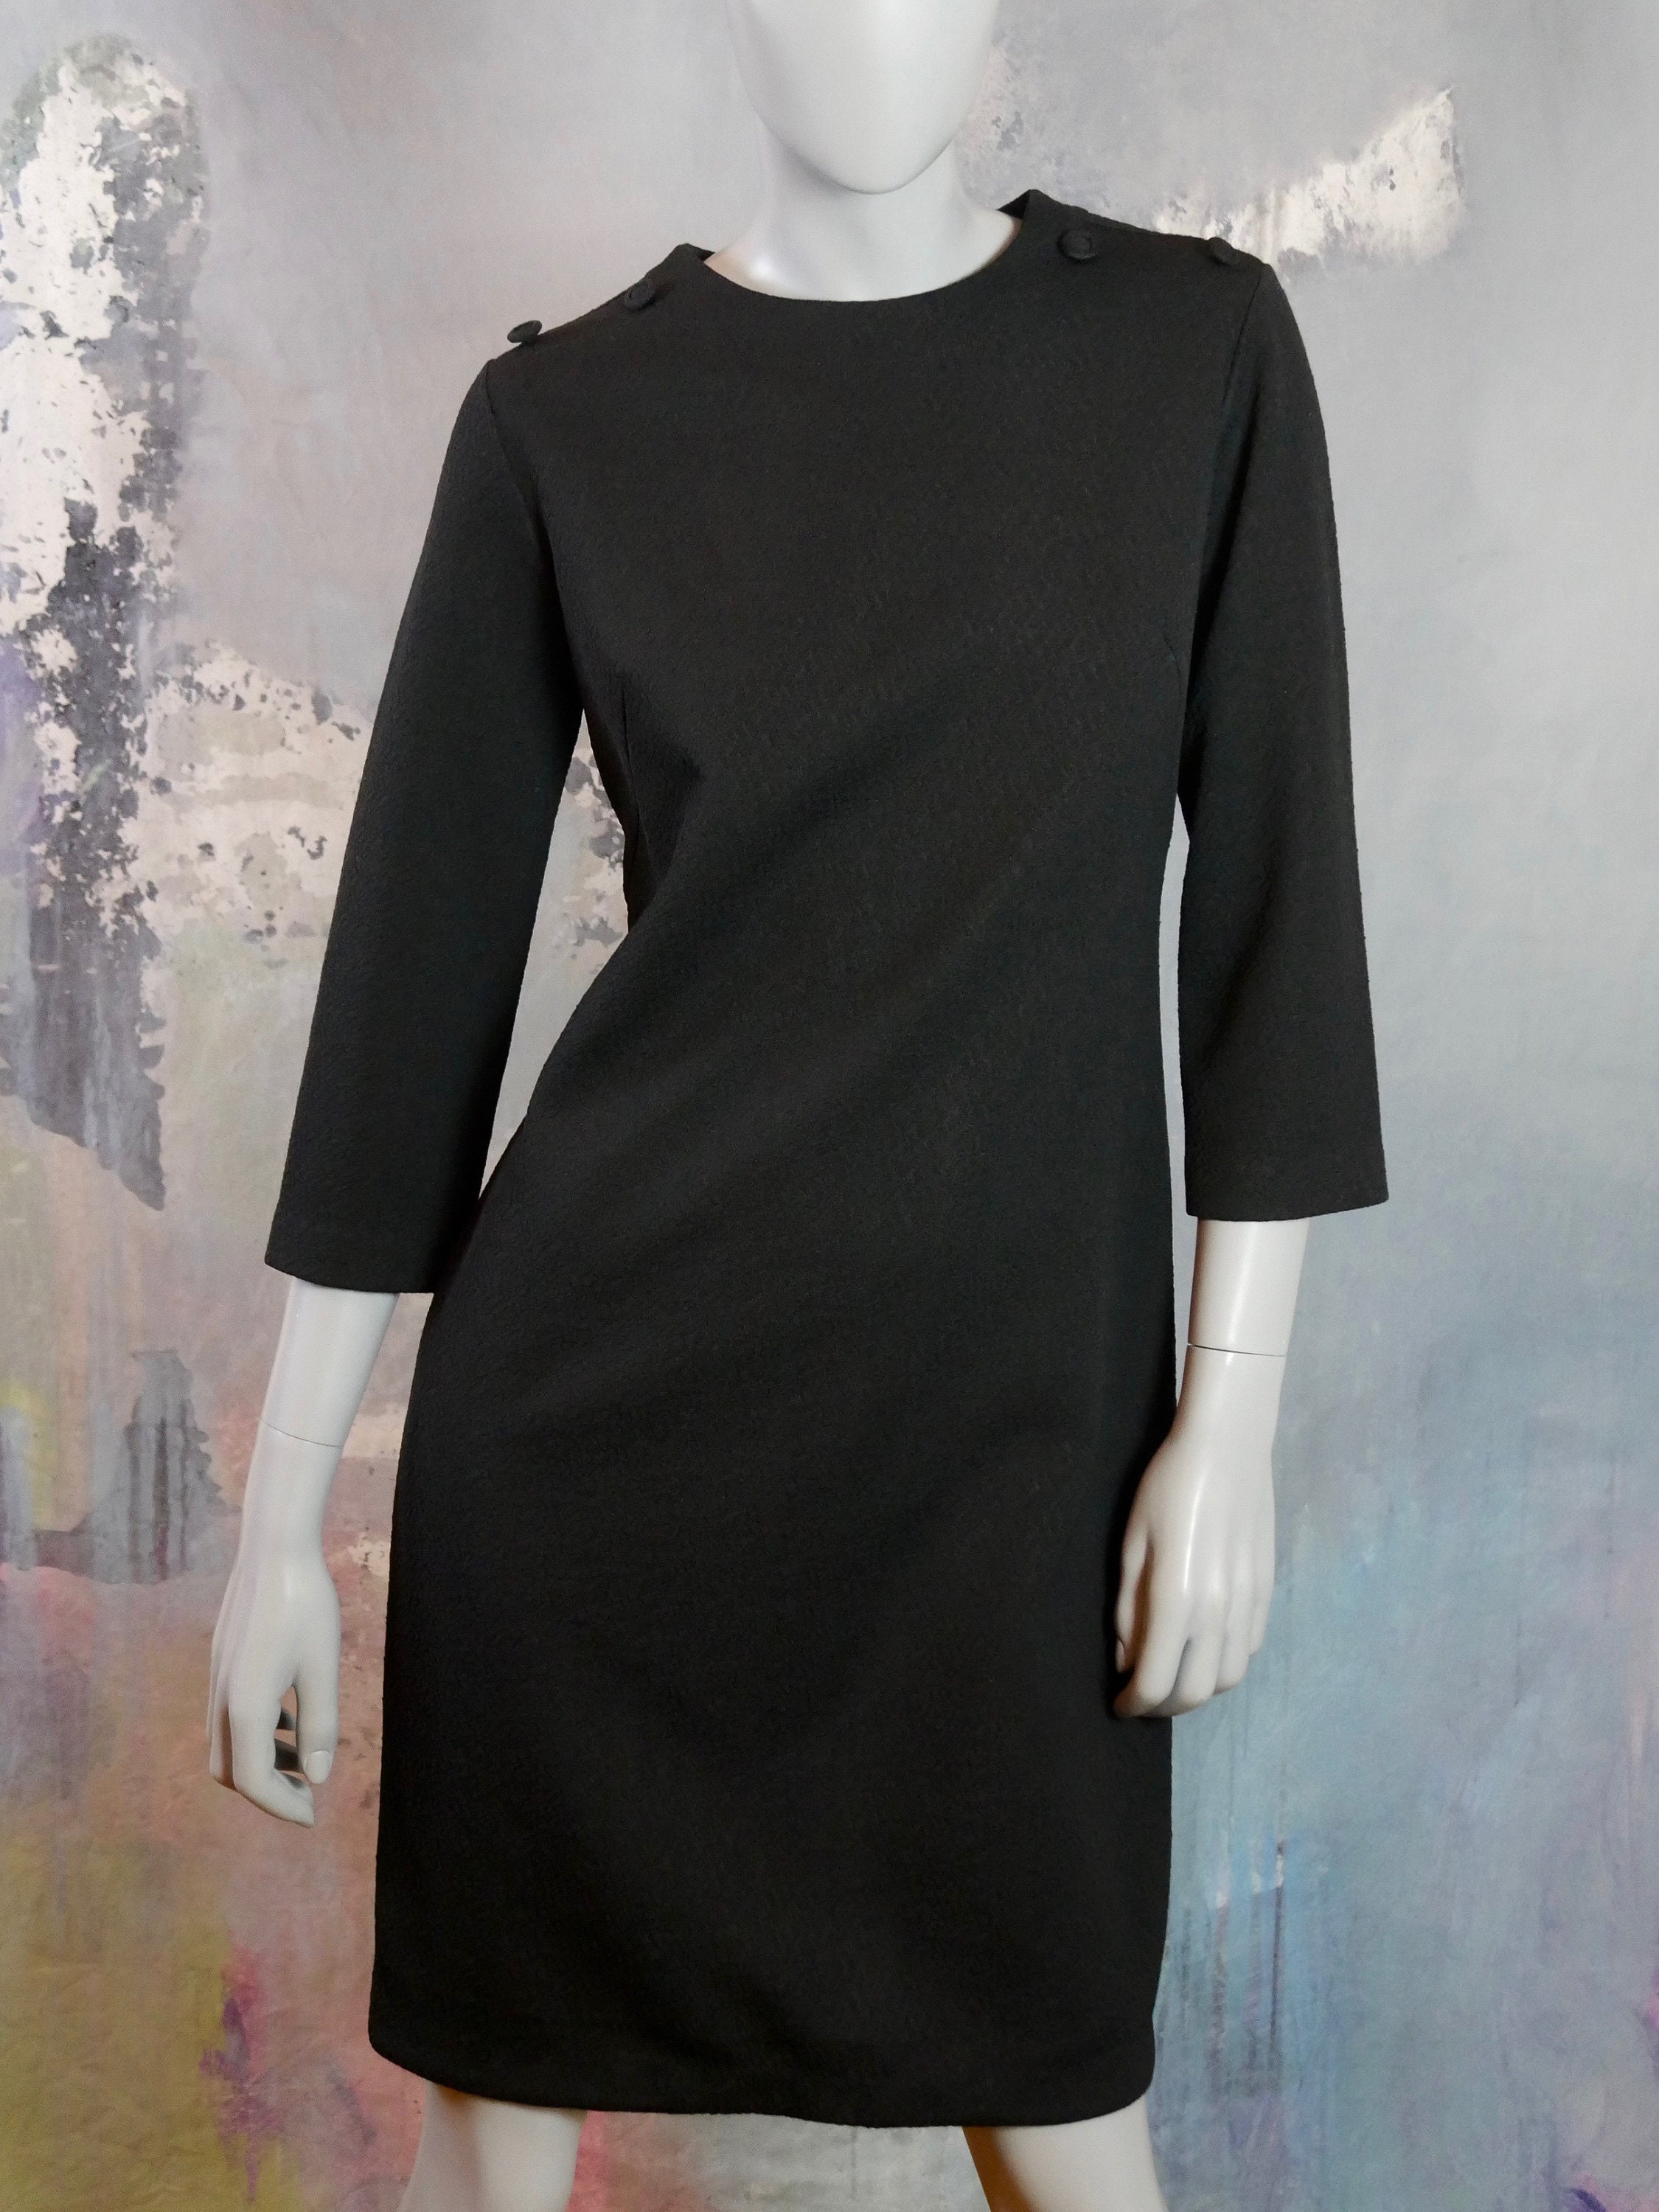 Swedish Vintage Black Dress Mod Jackie Kennedy Style 1960s | Etsy